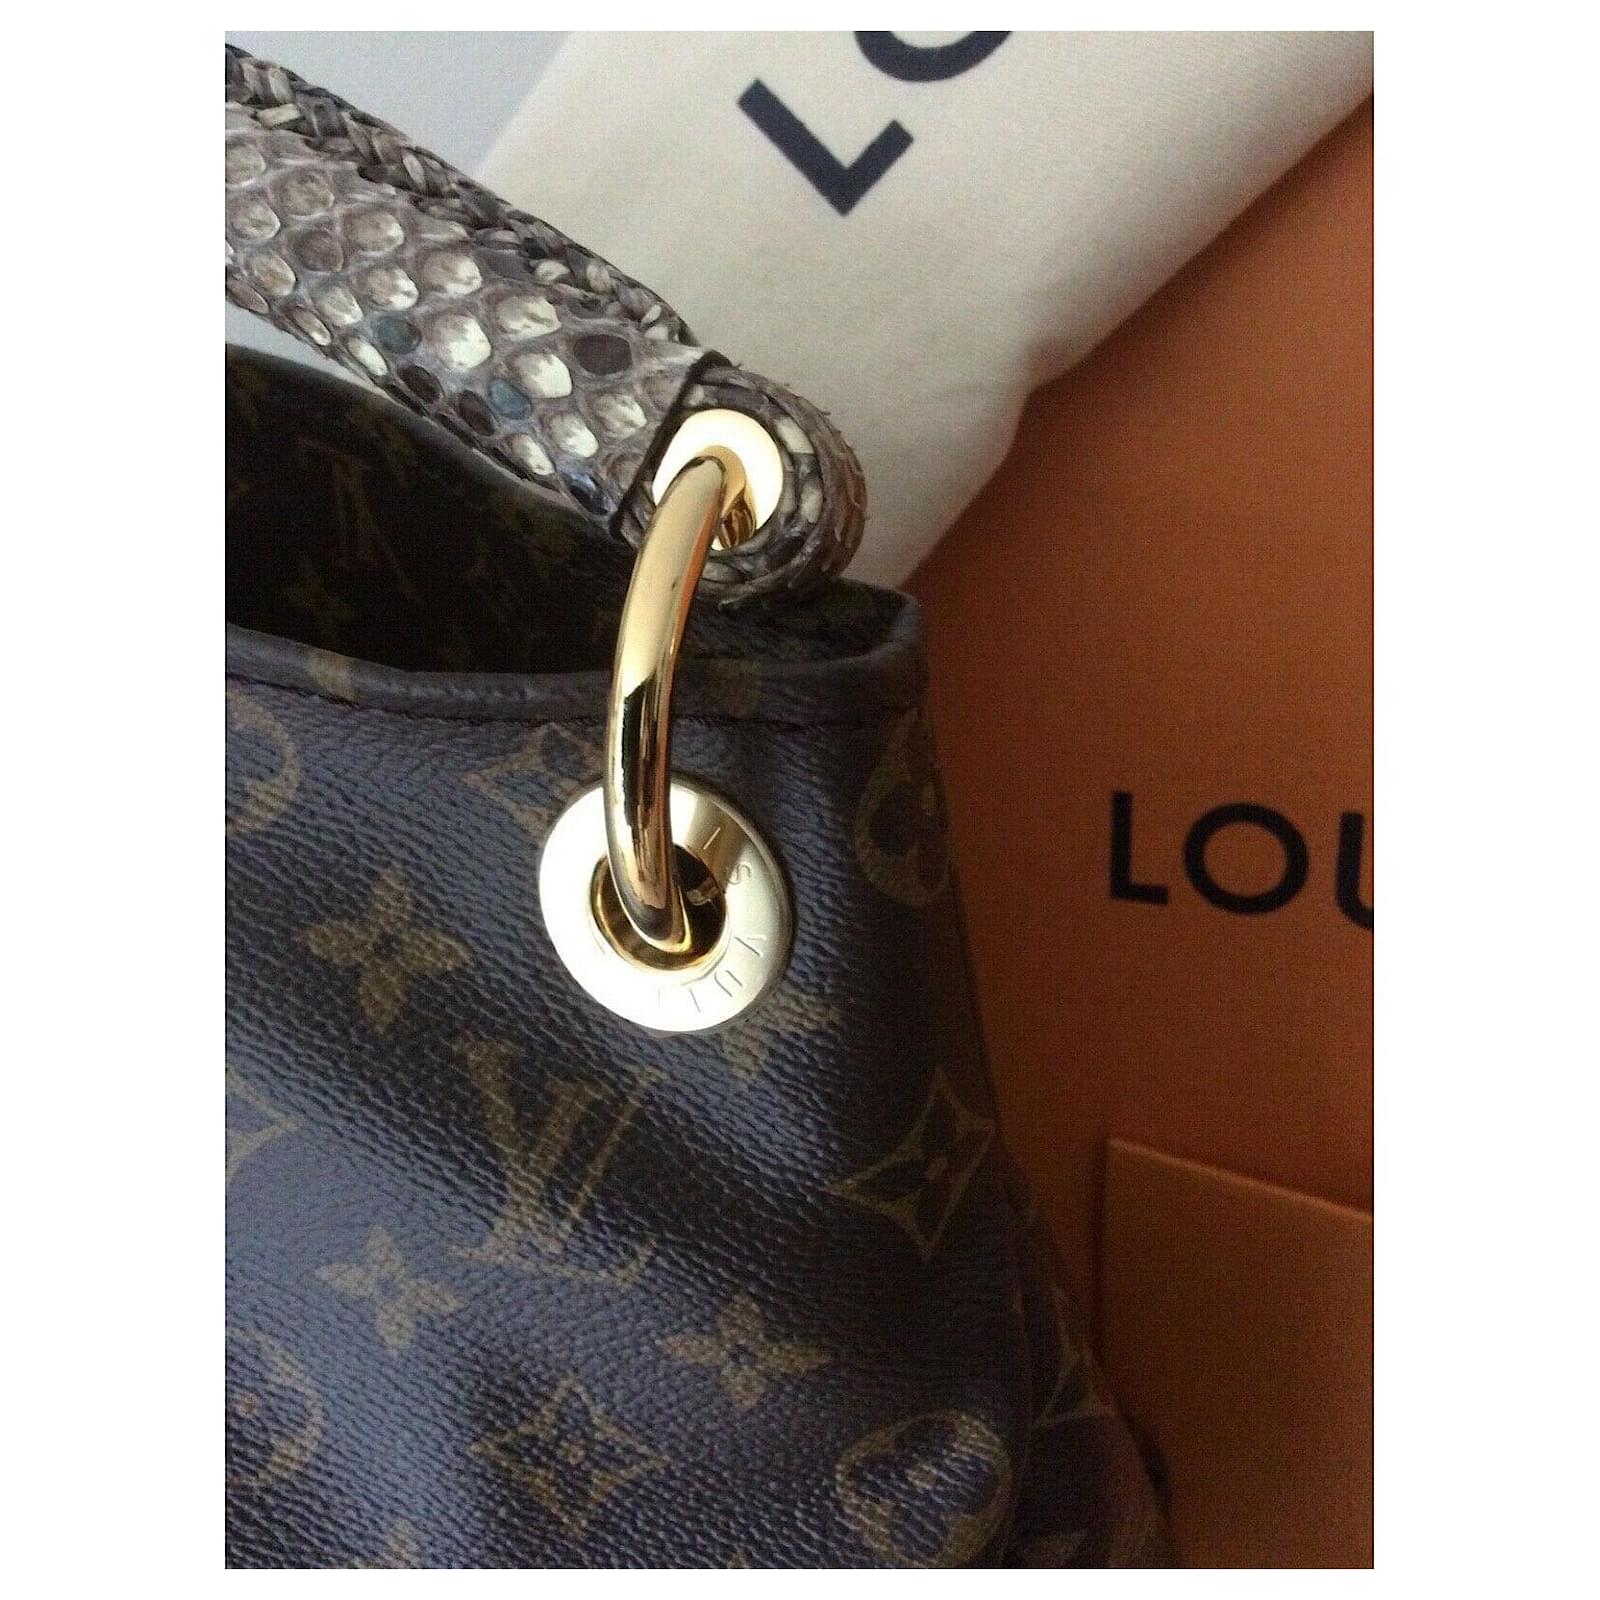 Louis Vuitton Artsy Mm Python Bag